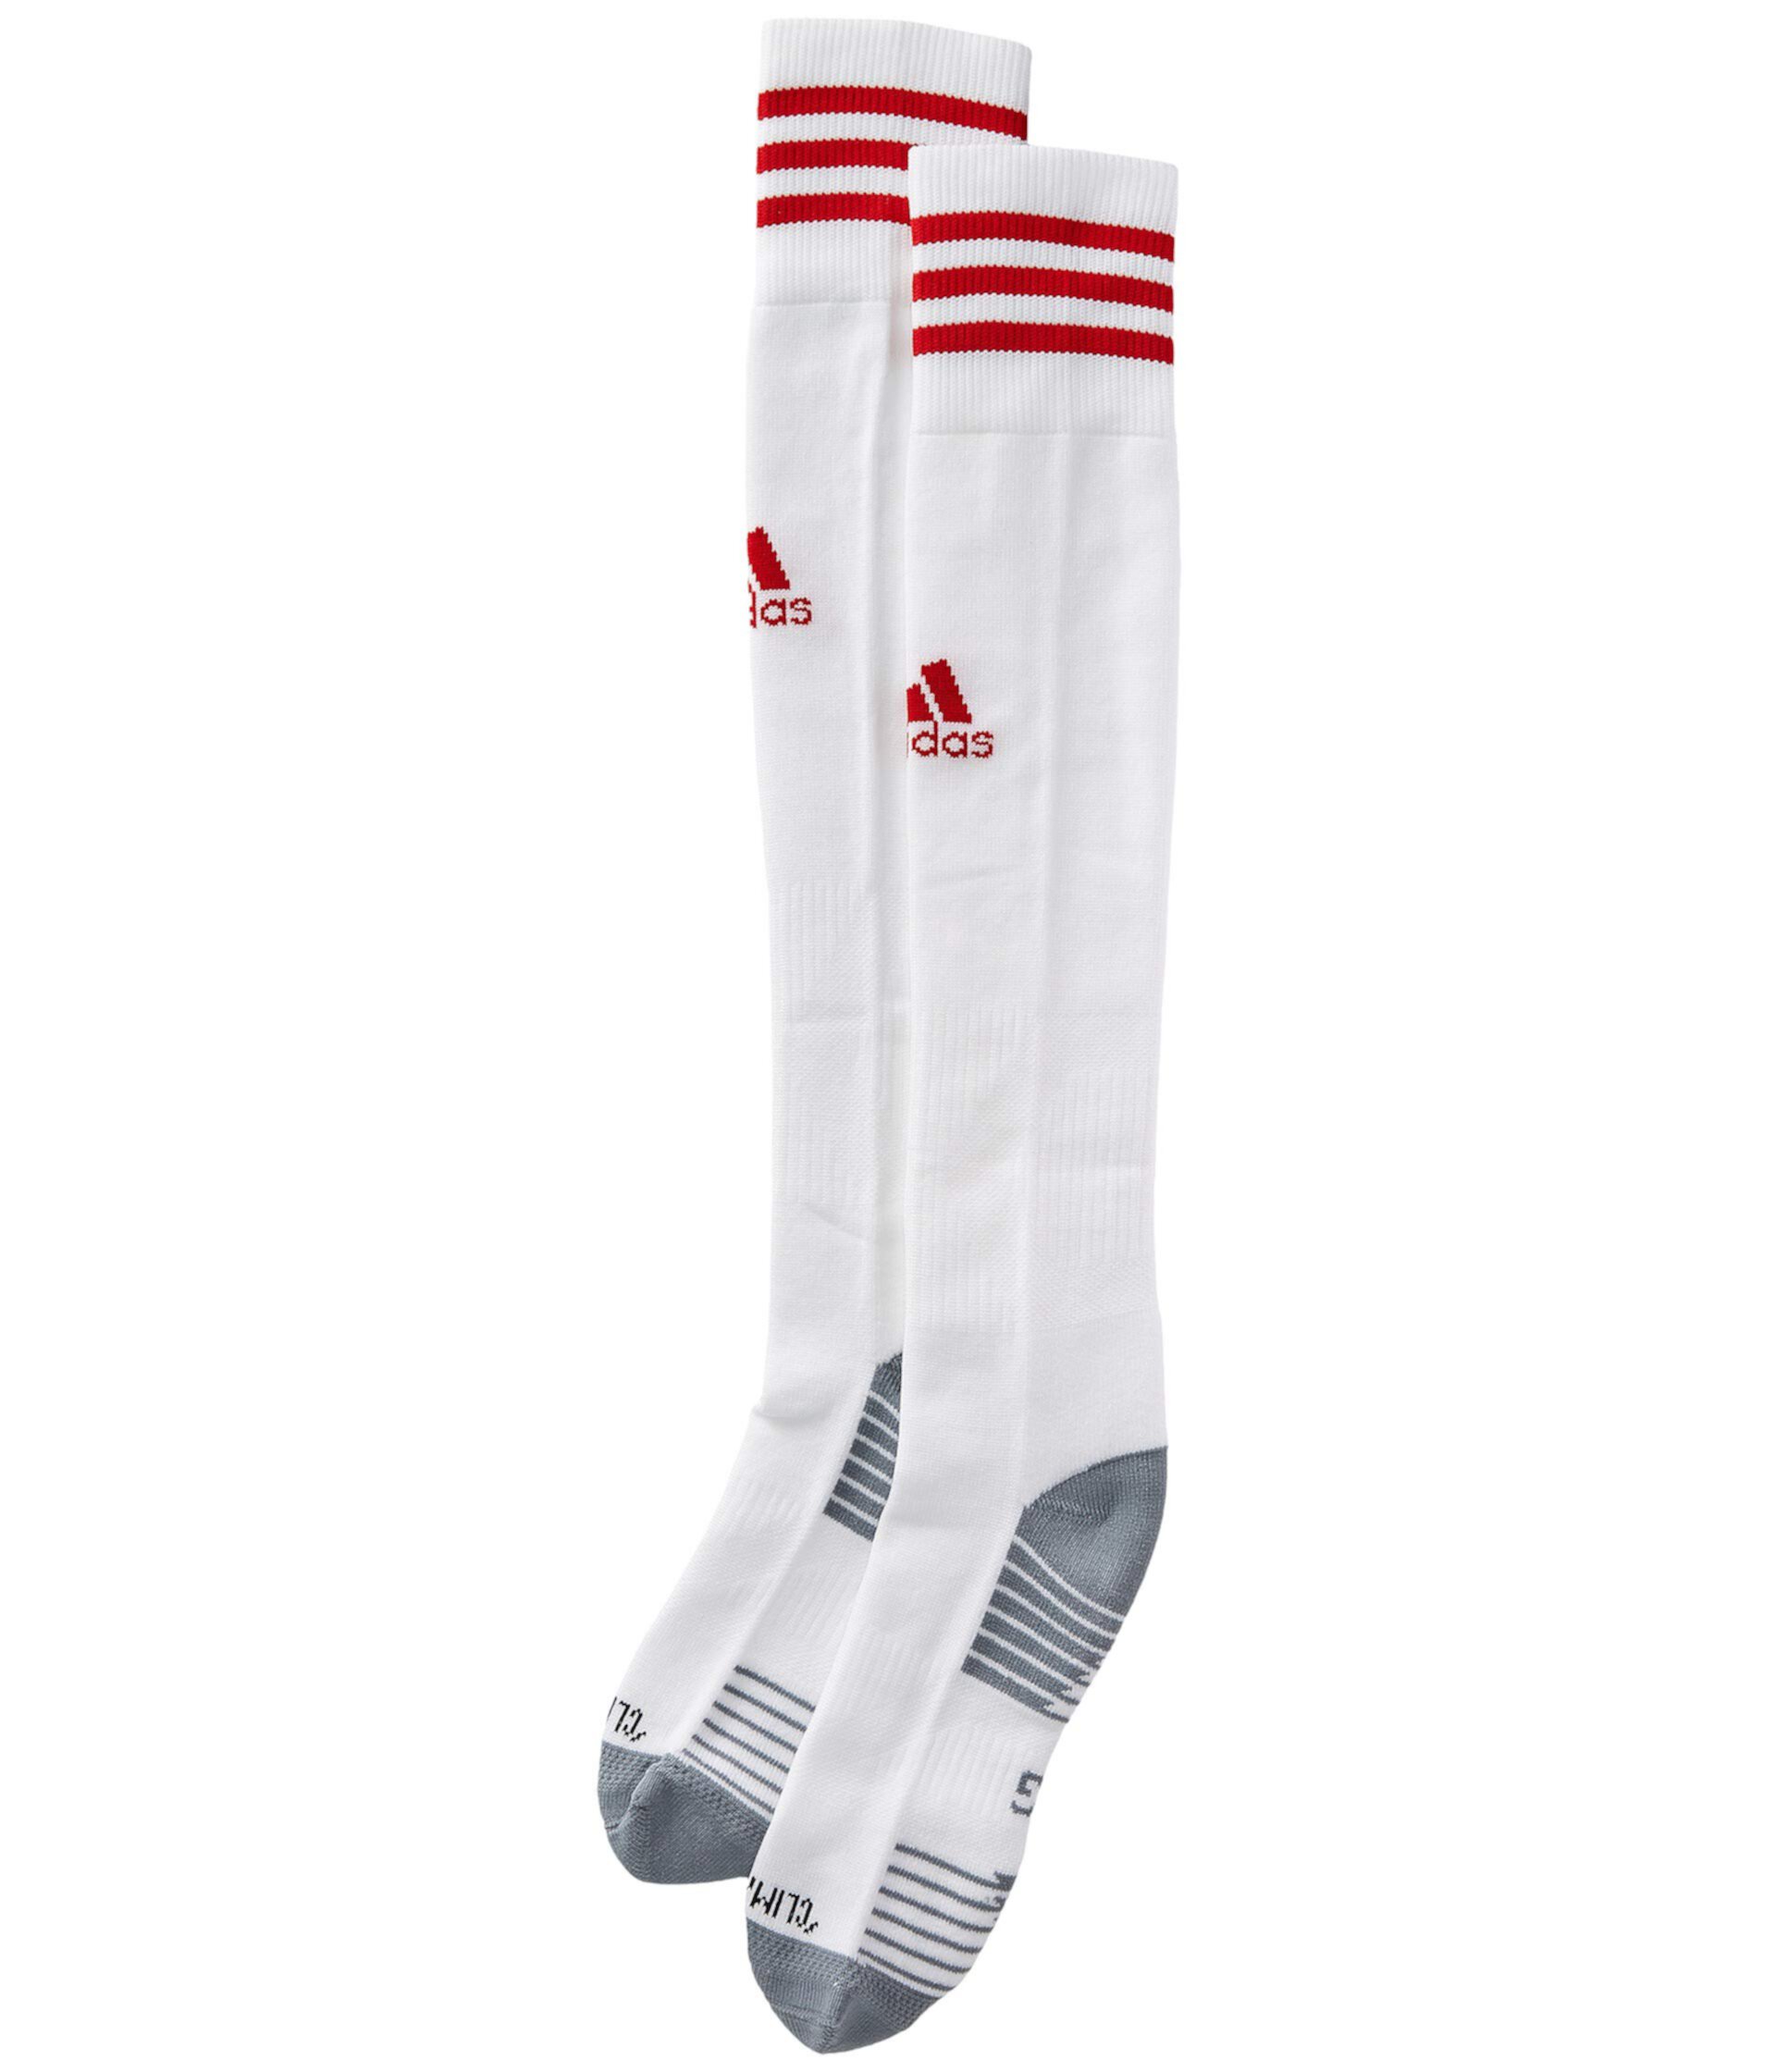 Подушка Copa Zone IV поверх носка для теленка Adidas